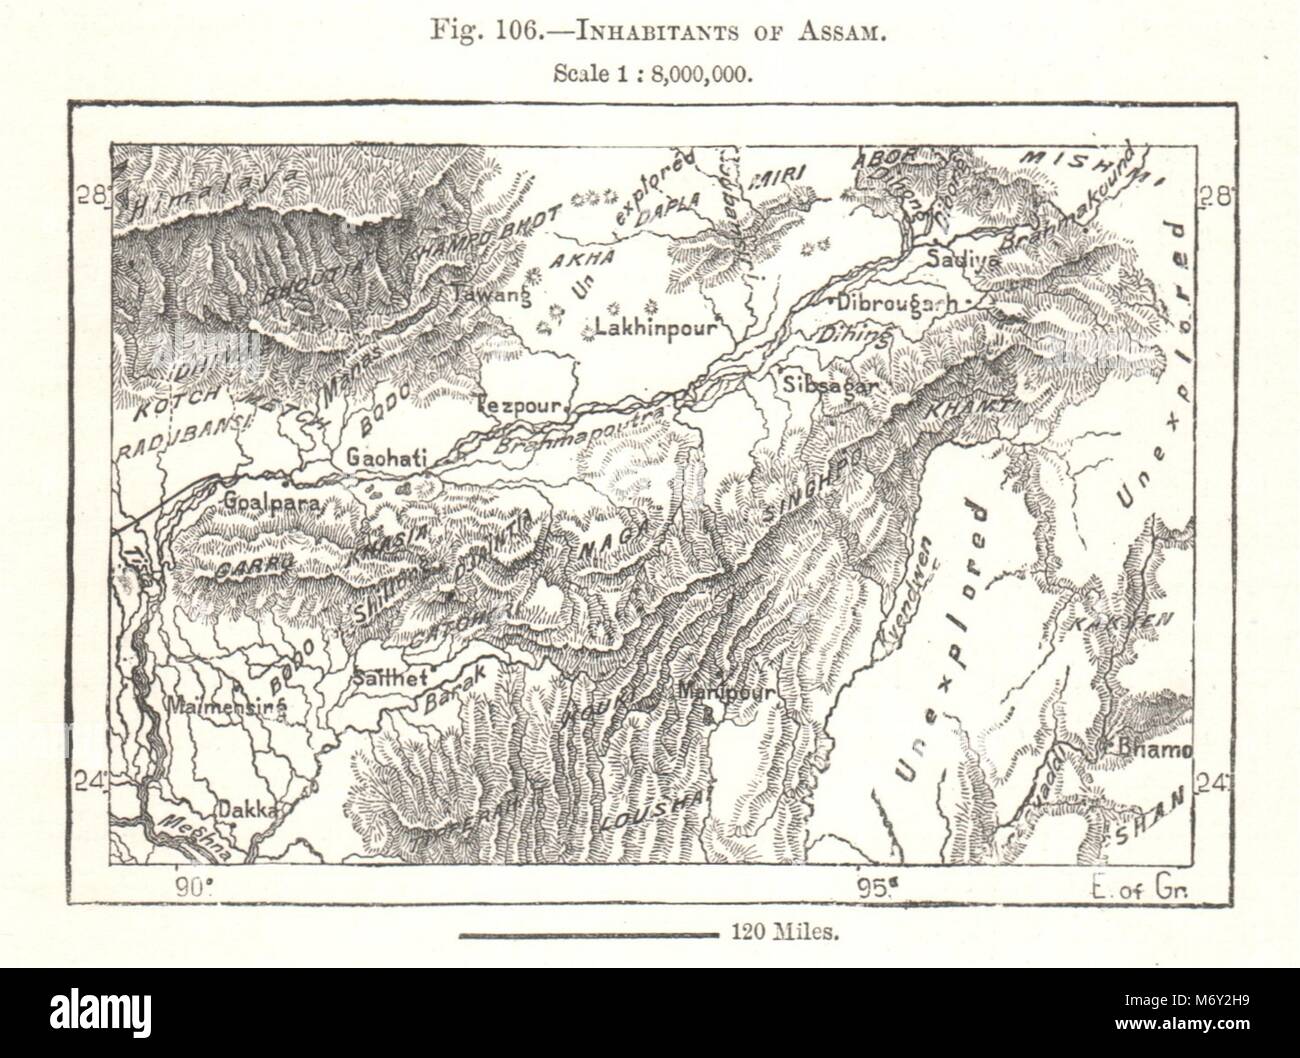 Inhabitants of Assam Sketch map 1885 old antique plan chart India 